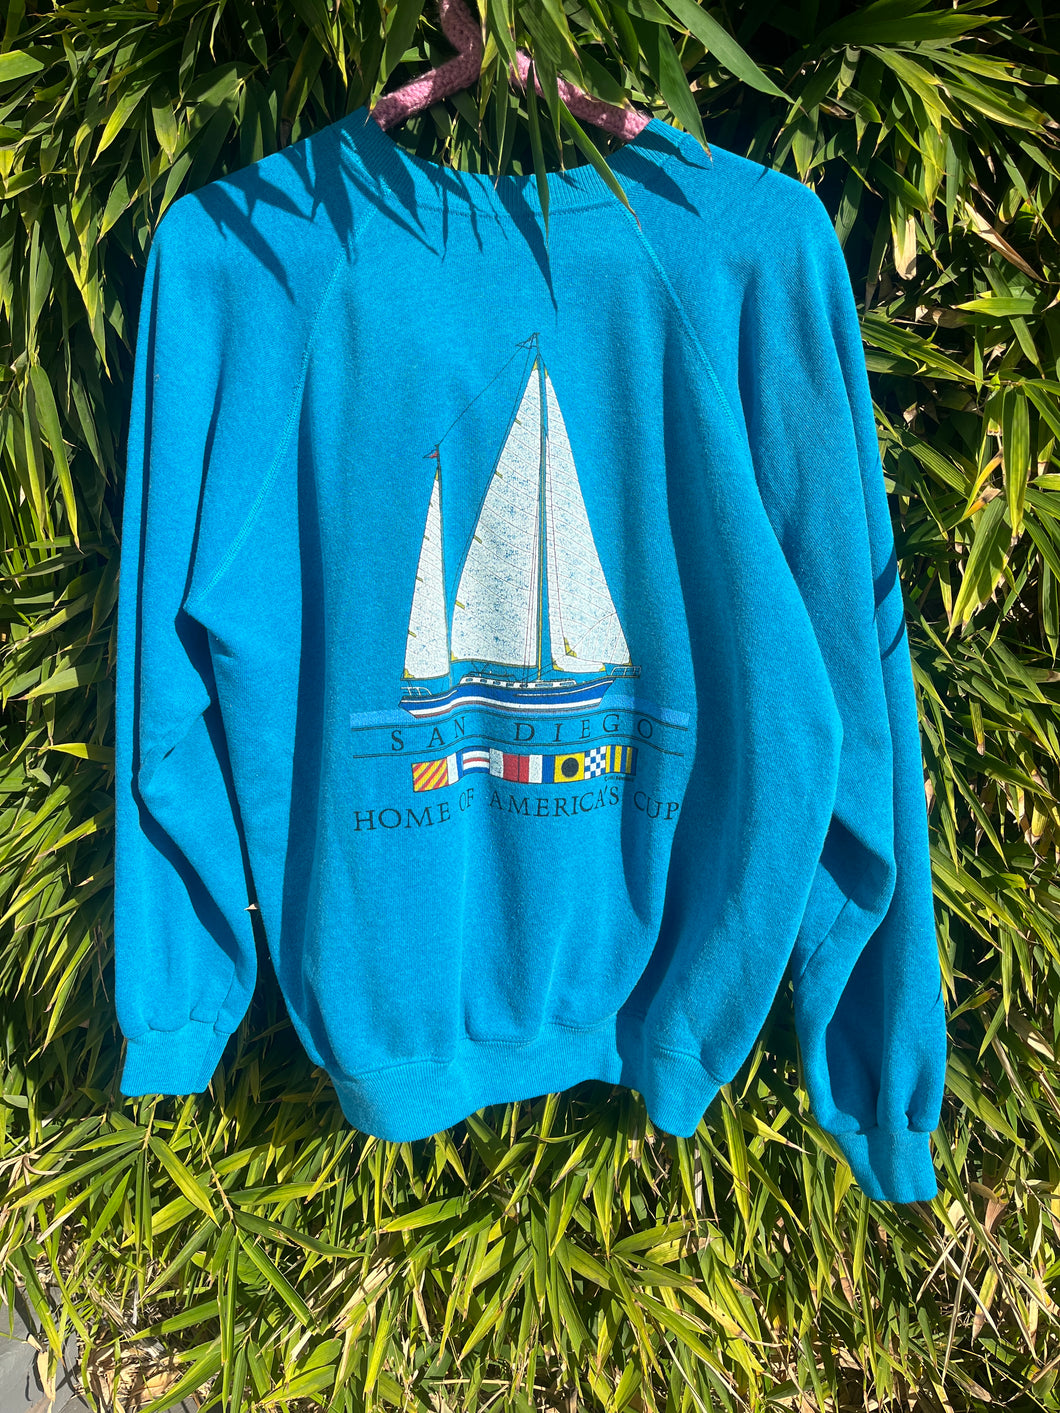 San Diego Home of the Americas Cup 1987 Sweatshirt